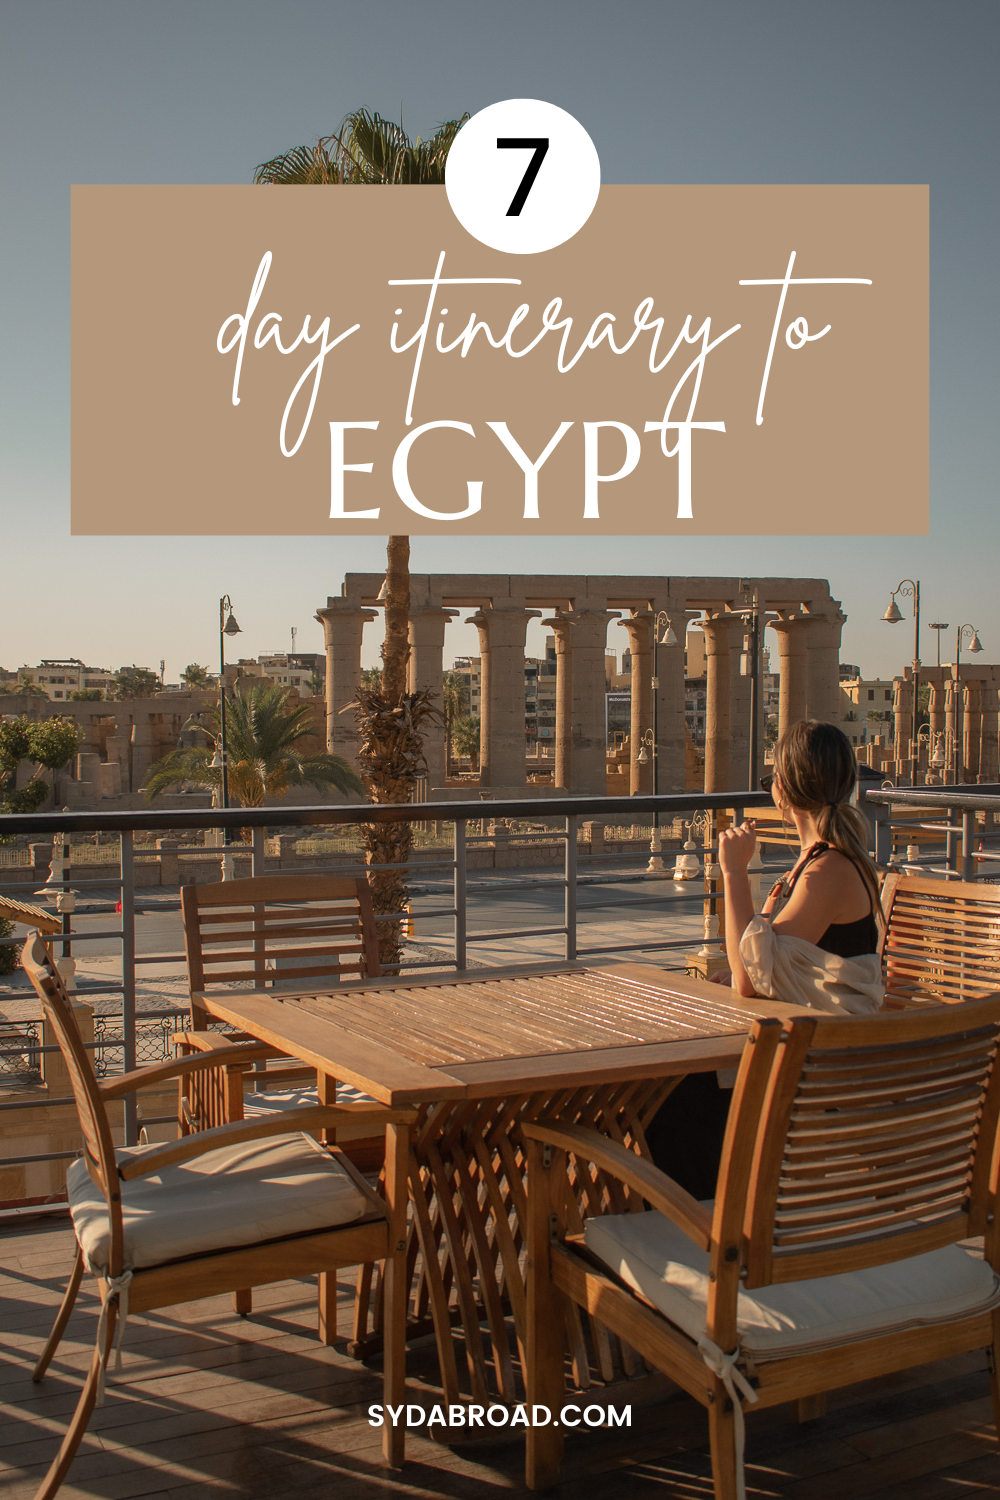 7 days itinerary Egypt